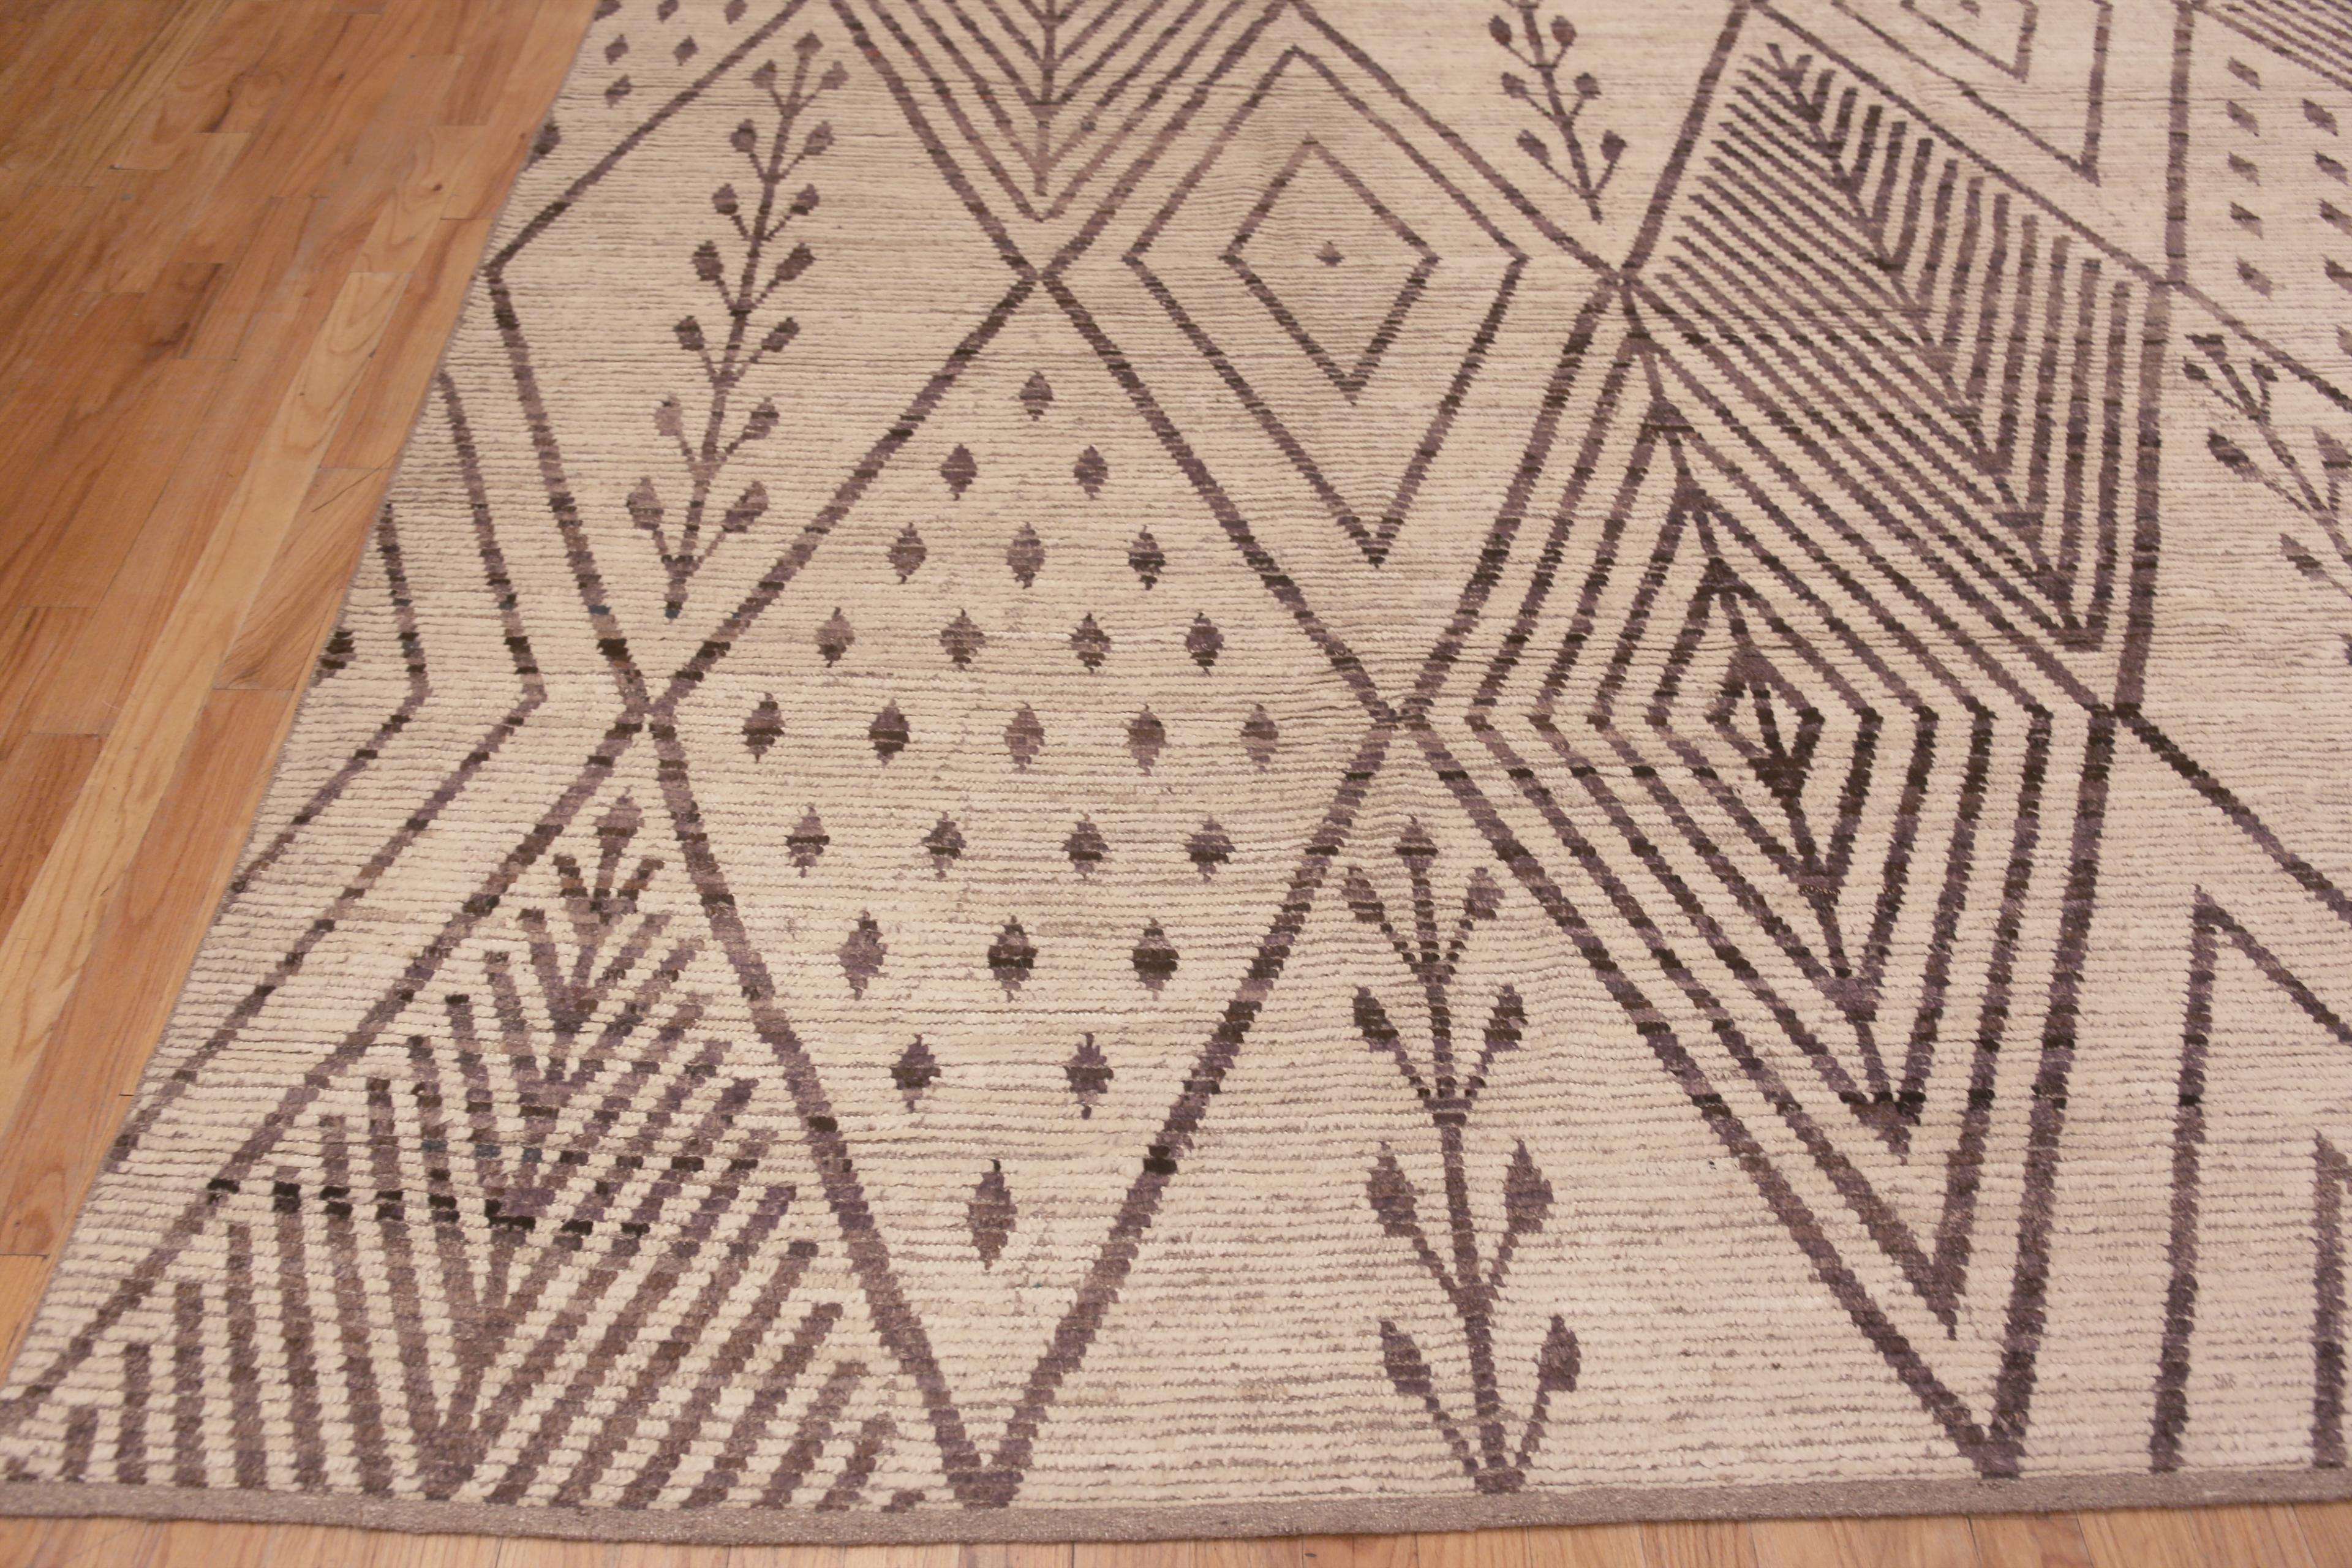 Laine Collection Nazmiyal Tribal Geometric Beni Ourain Design Modern Rug 12' x 15'3